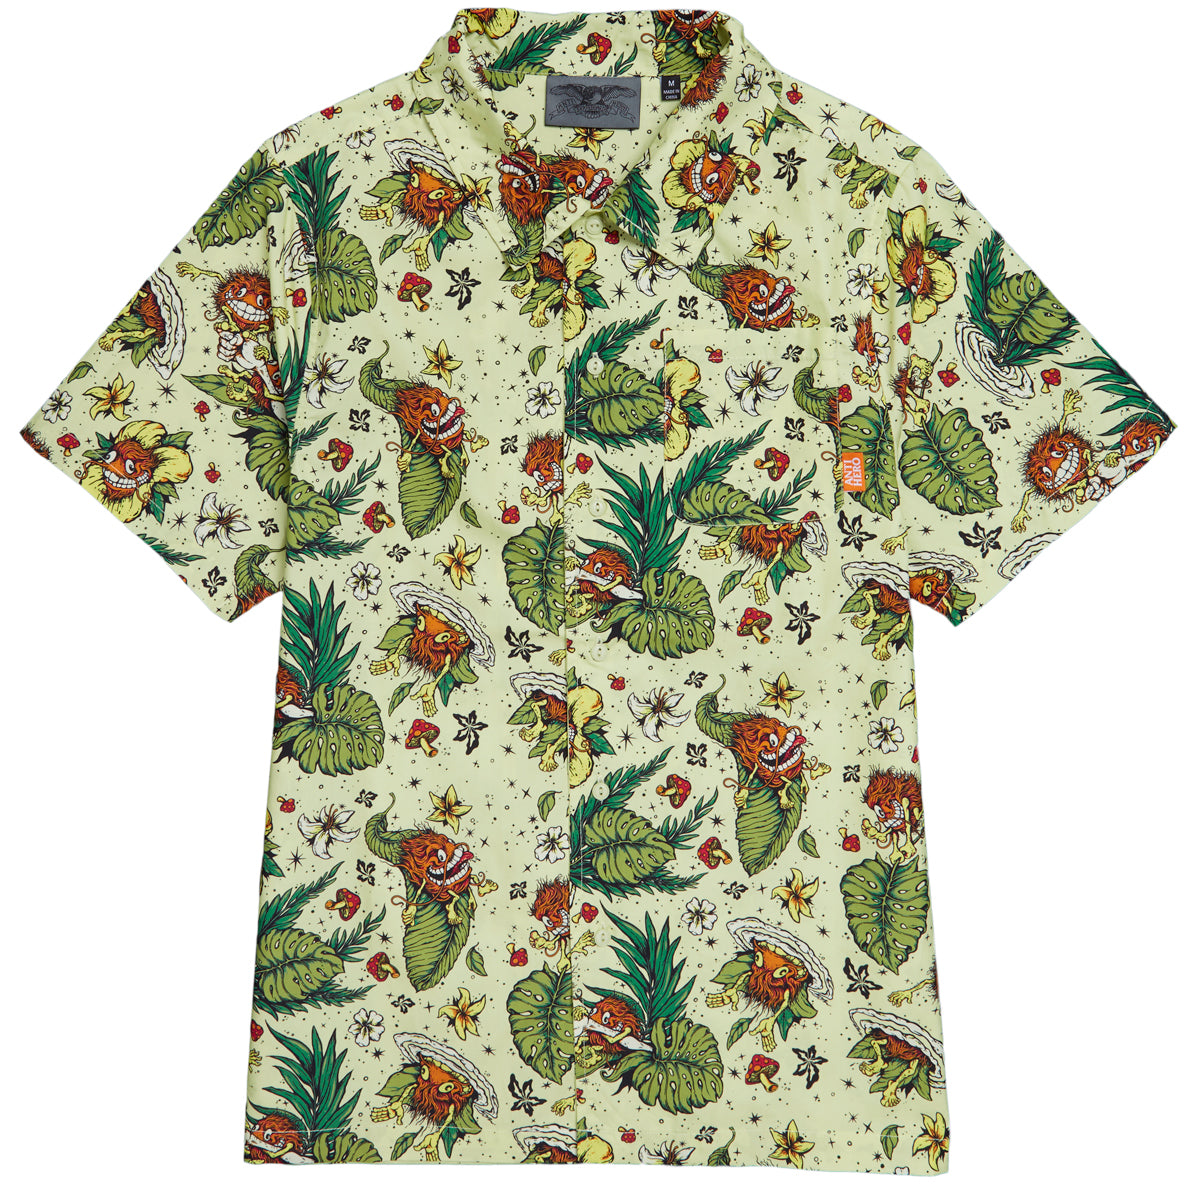 Anti-Hero Grimple Camper Shirt - Multi Color image 1